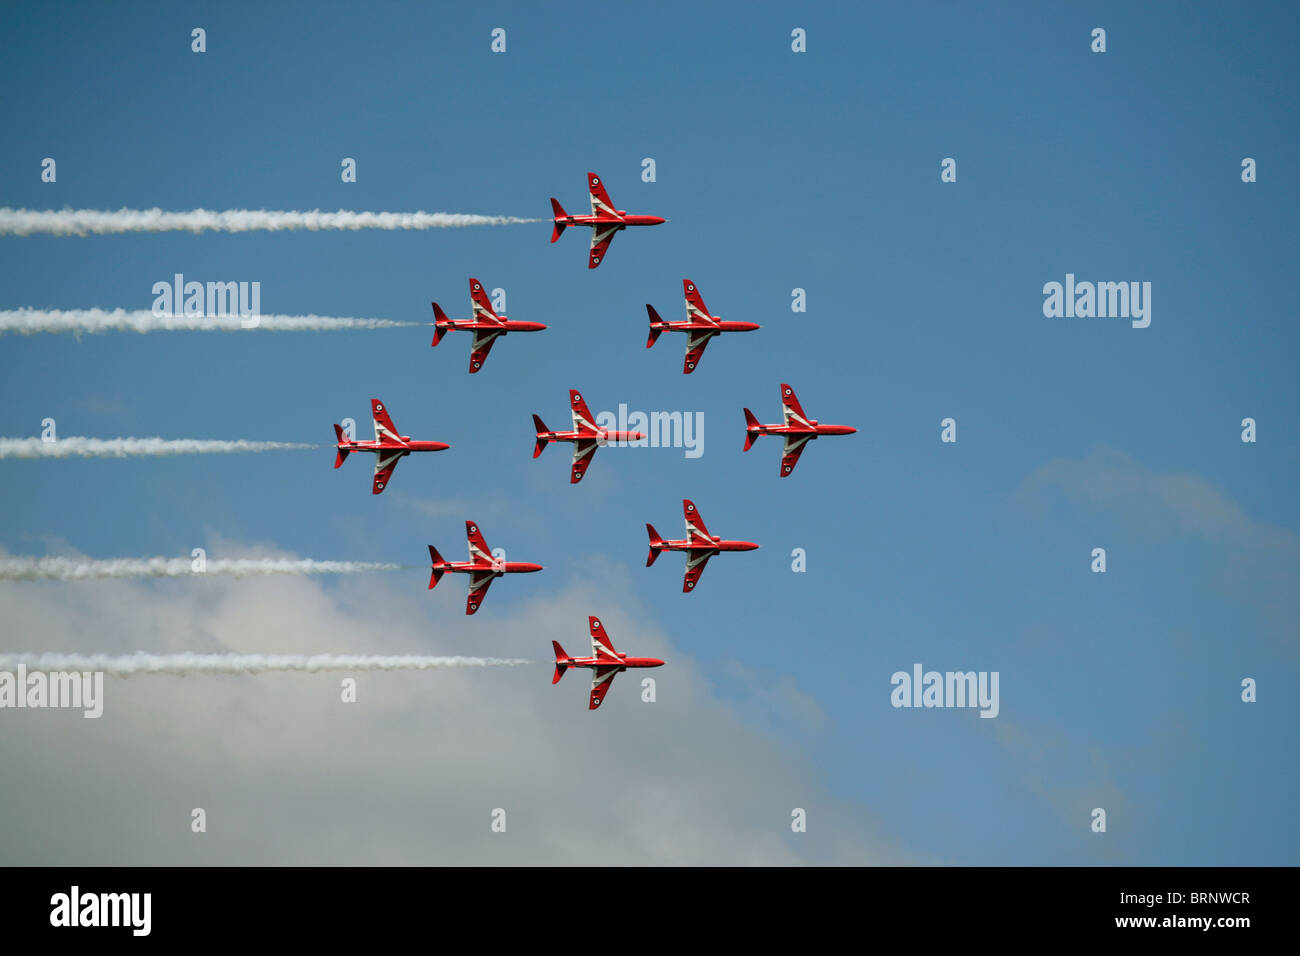 Des flèches rouges display team airshow formation diamant Banque D'Images